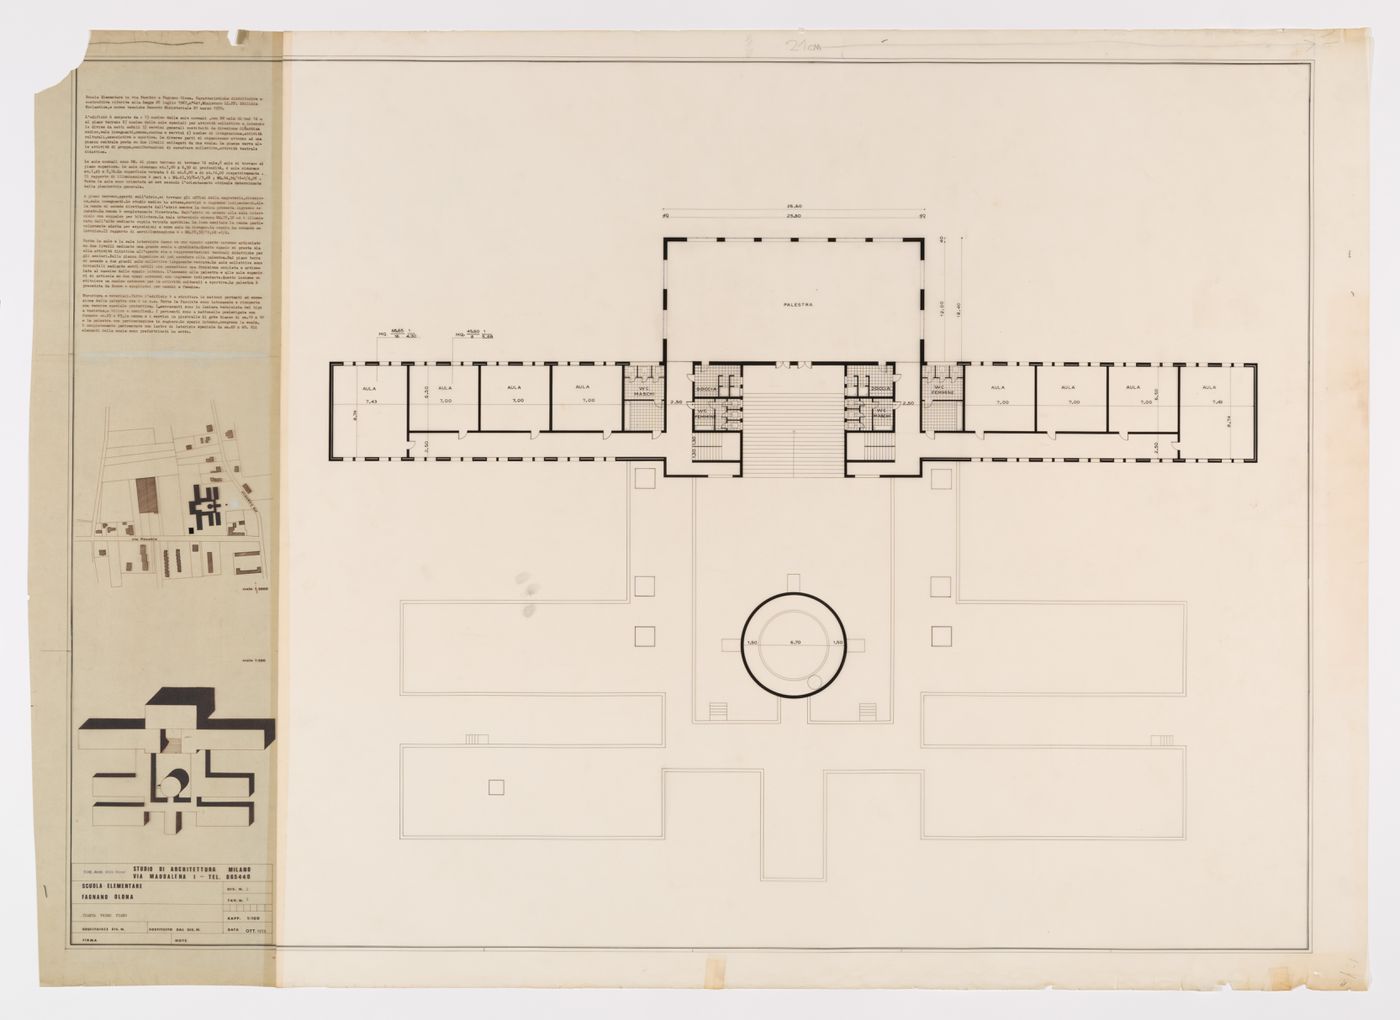 First floor plan (Pianta primo piano), Scuola elementare a Fagnano Olona, Italy